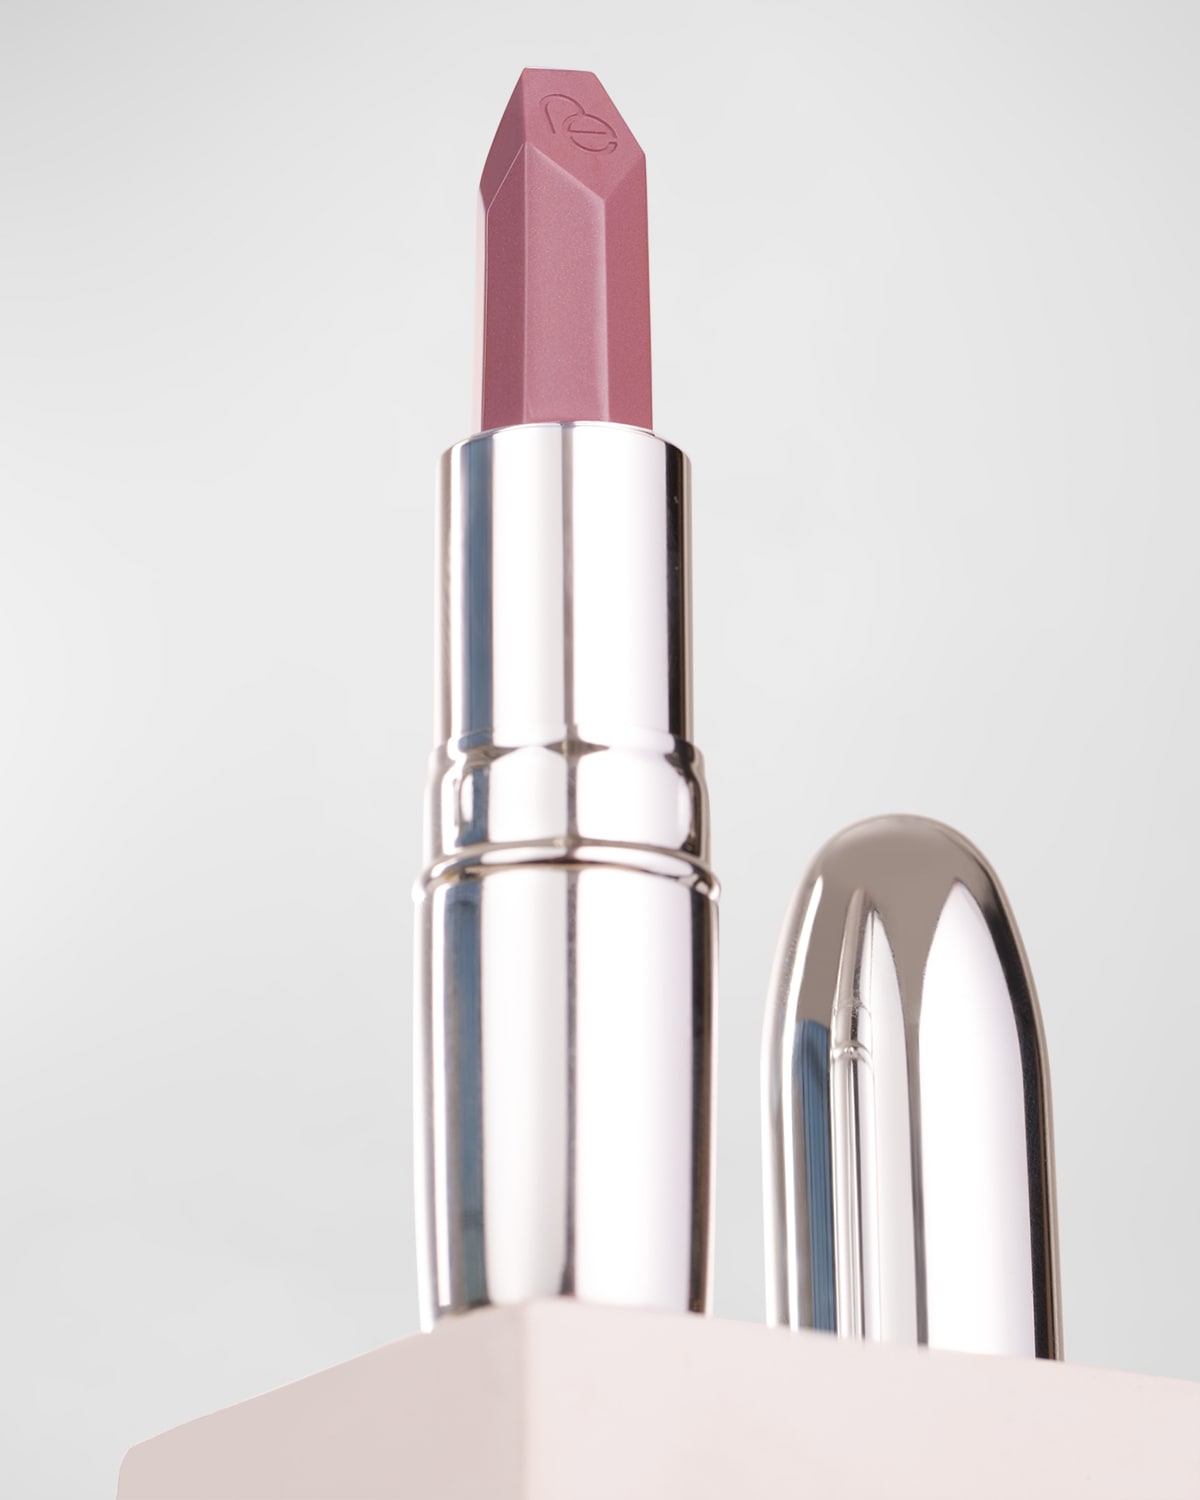 Nude Envie Berry Nudes Lipstick In White